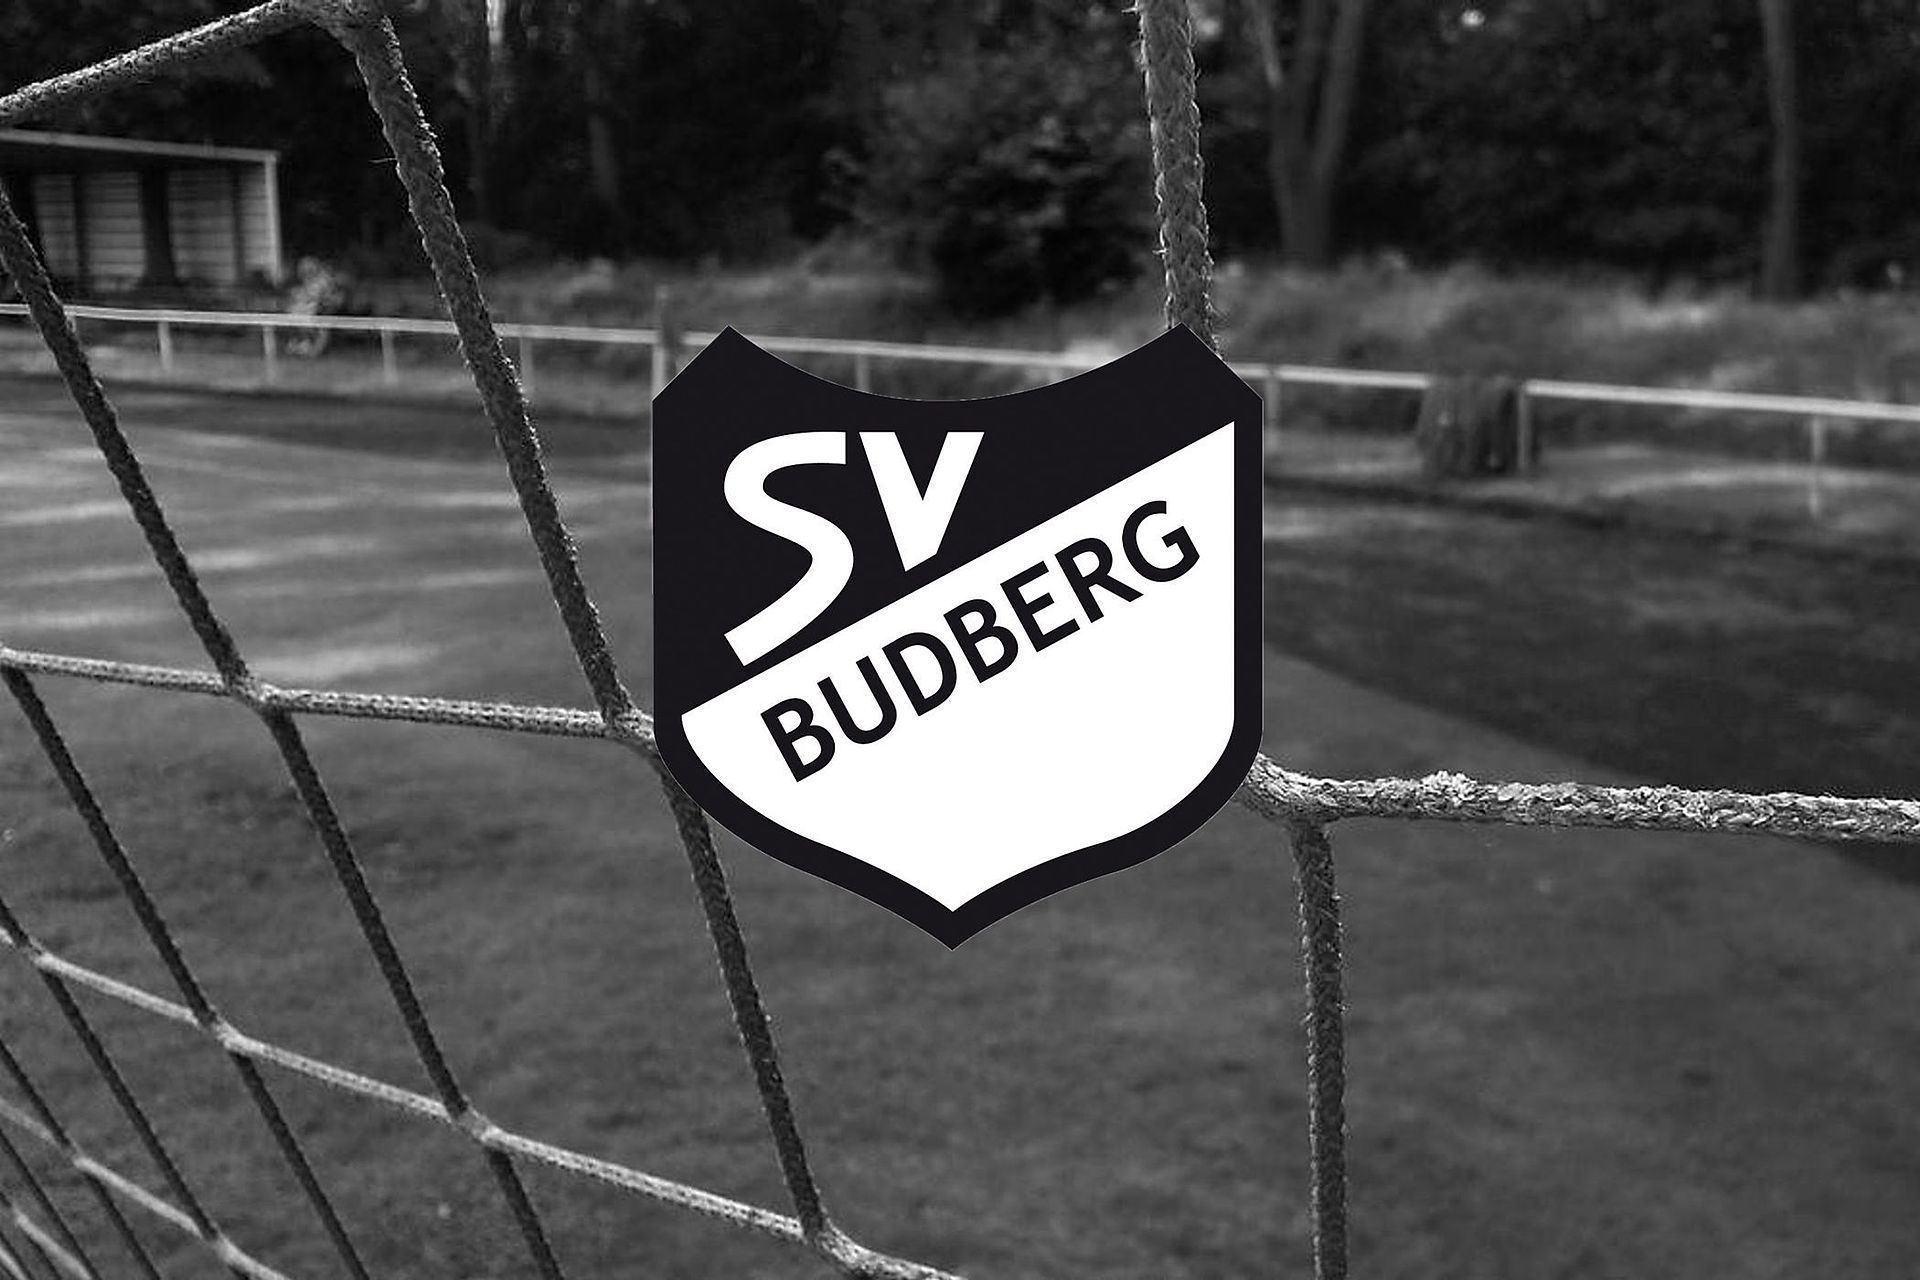 sv-budberg-24-football-club-facts